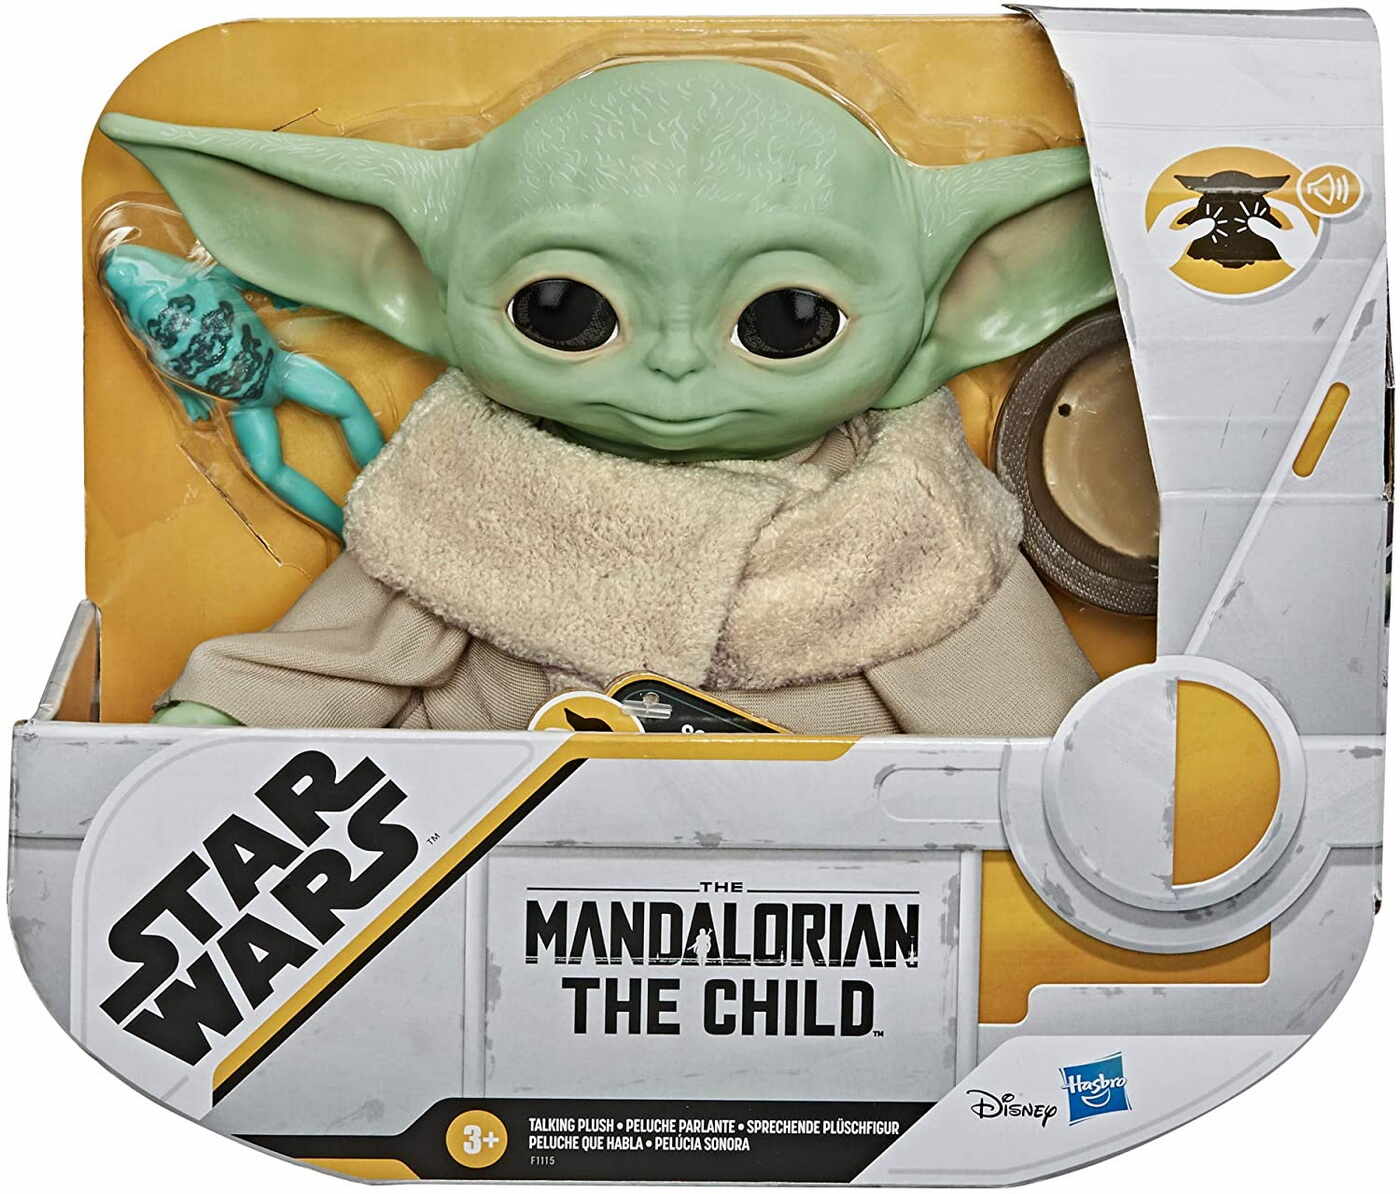 Plus vorbitor - The Child - Baby Yoda | Hasbro